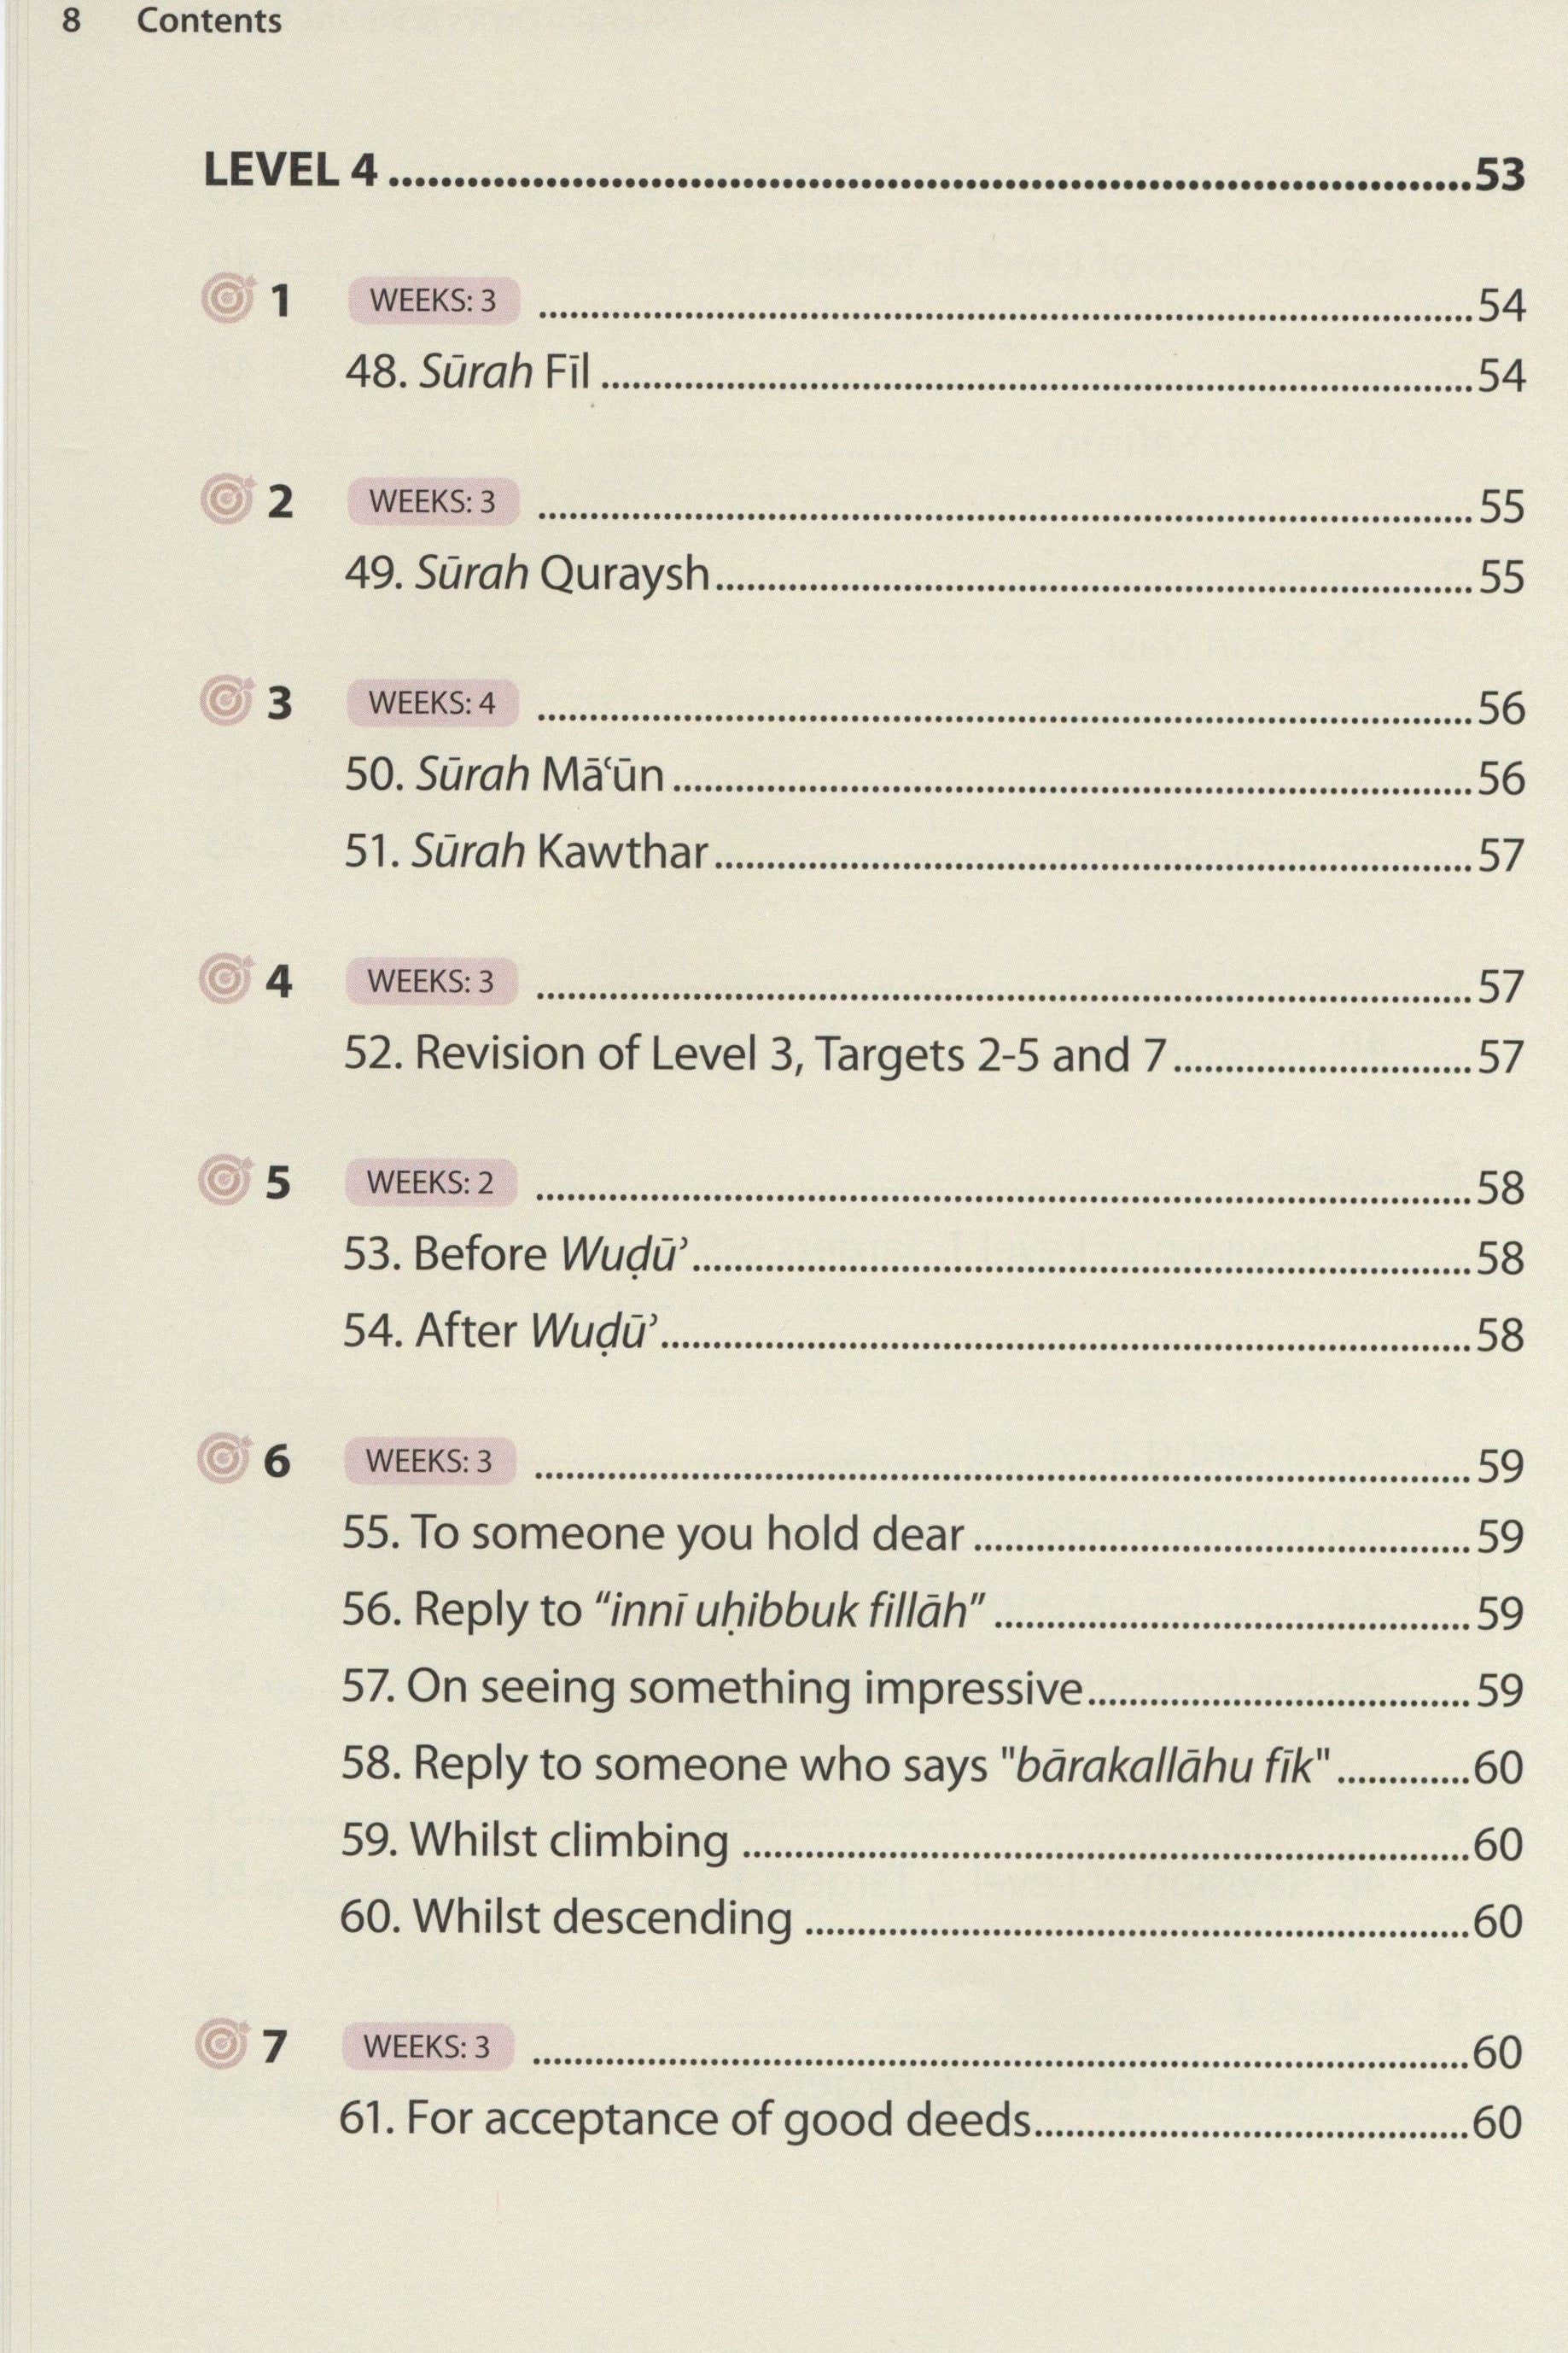 Essential Duas and Surahs Book 1 (Madinah Script)